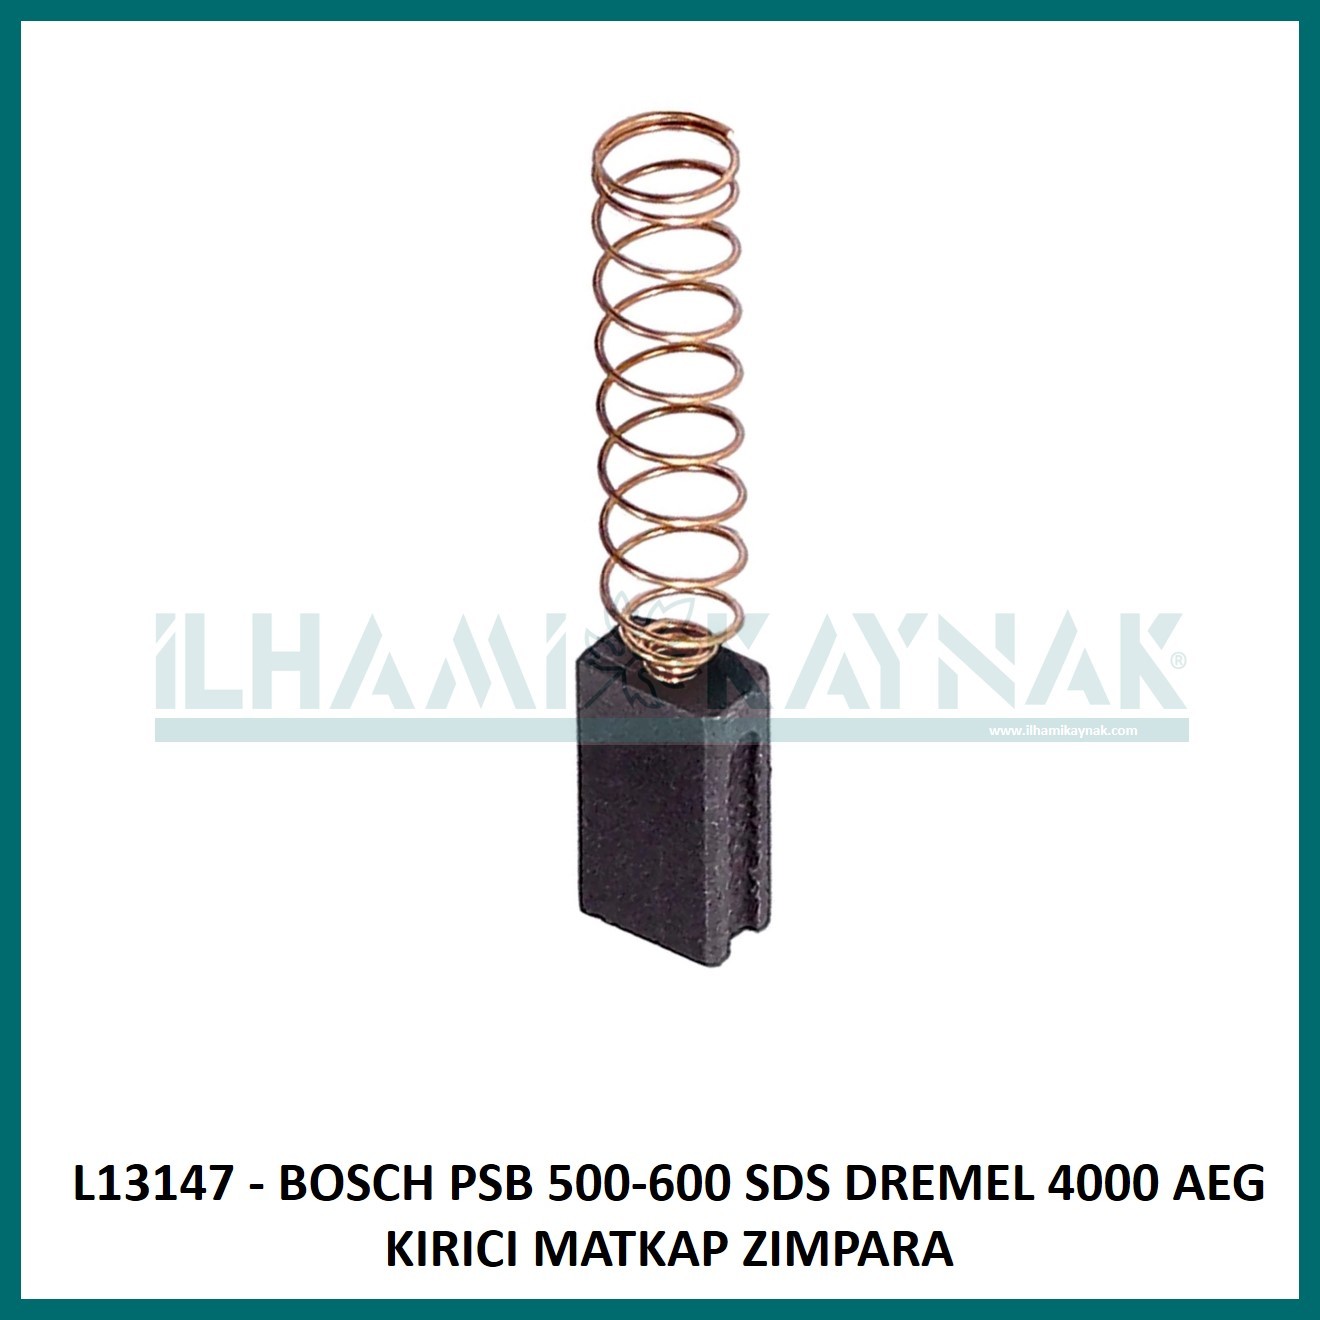 L13147 - BOSCH PSB 500-600 SDS DREMEL 4000 AEG KIRICI MATKAP ZIMPARA - 5*8*14 mm - Minimum Satın Alım: 10 Adet.